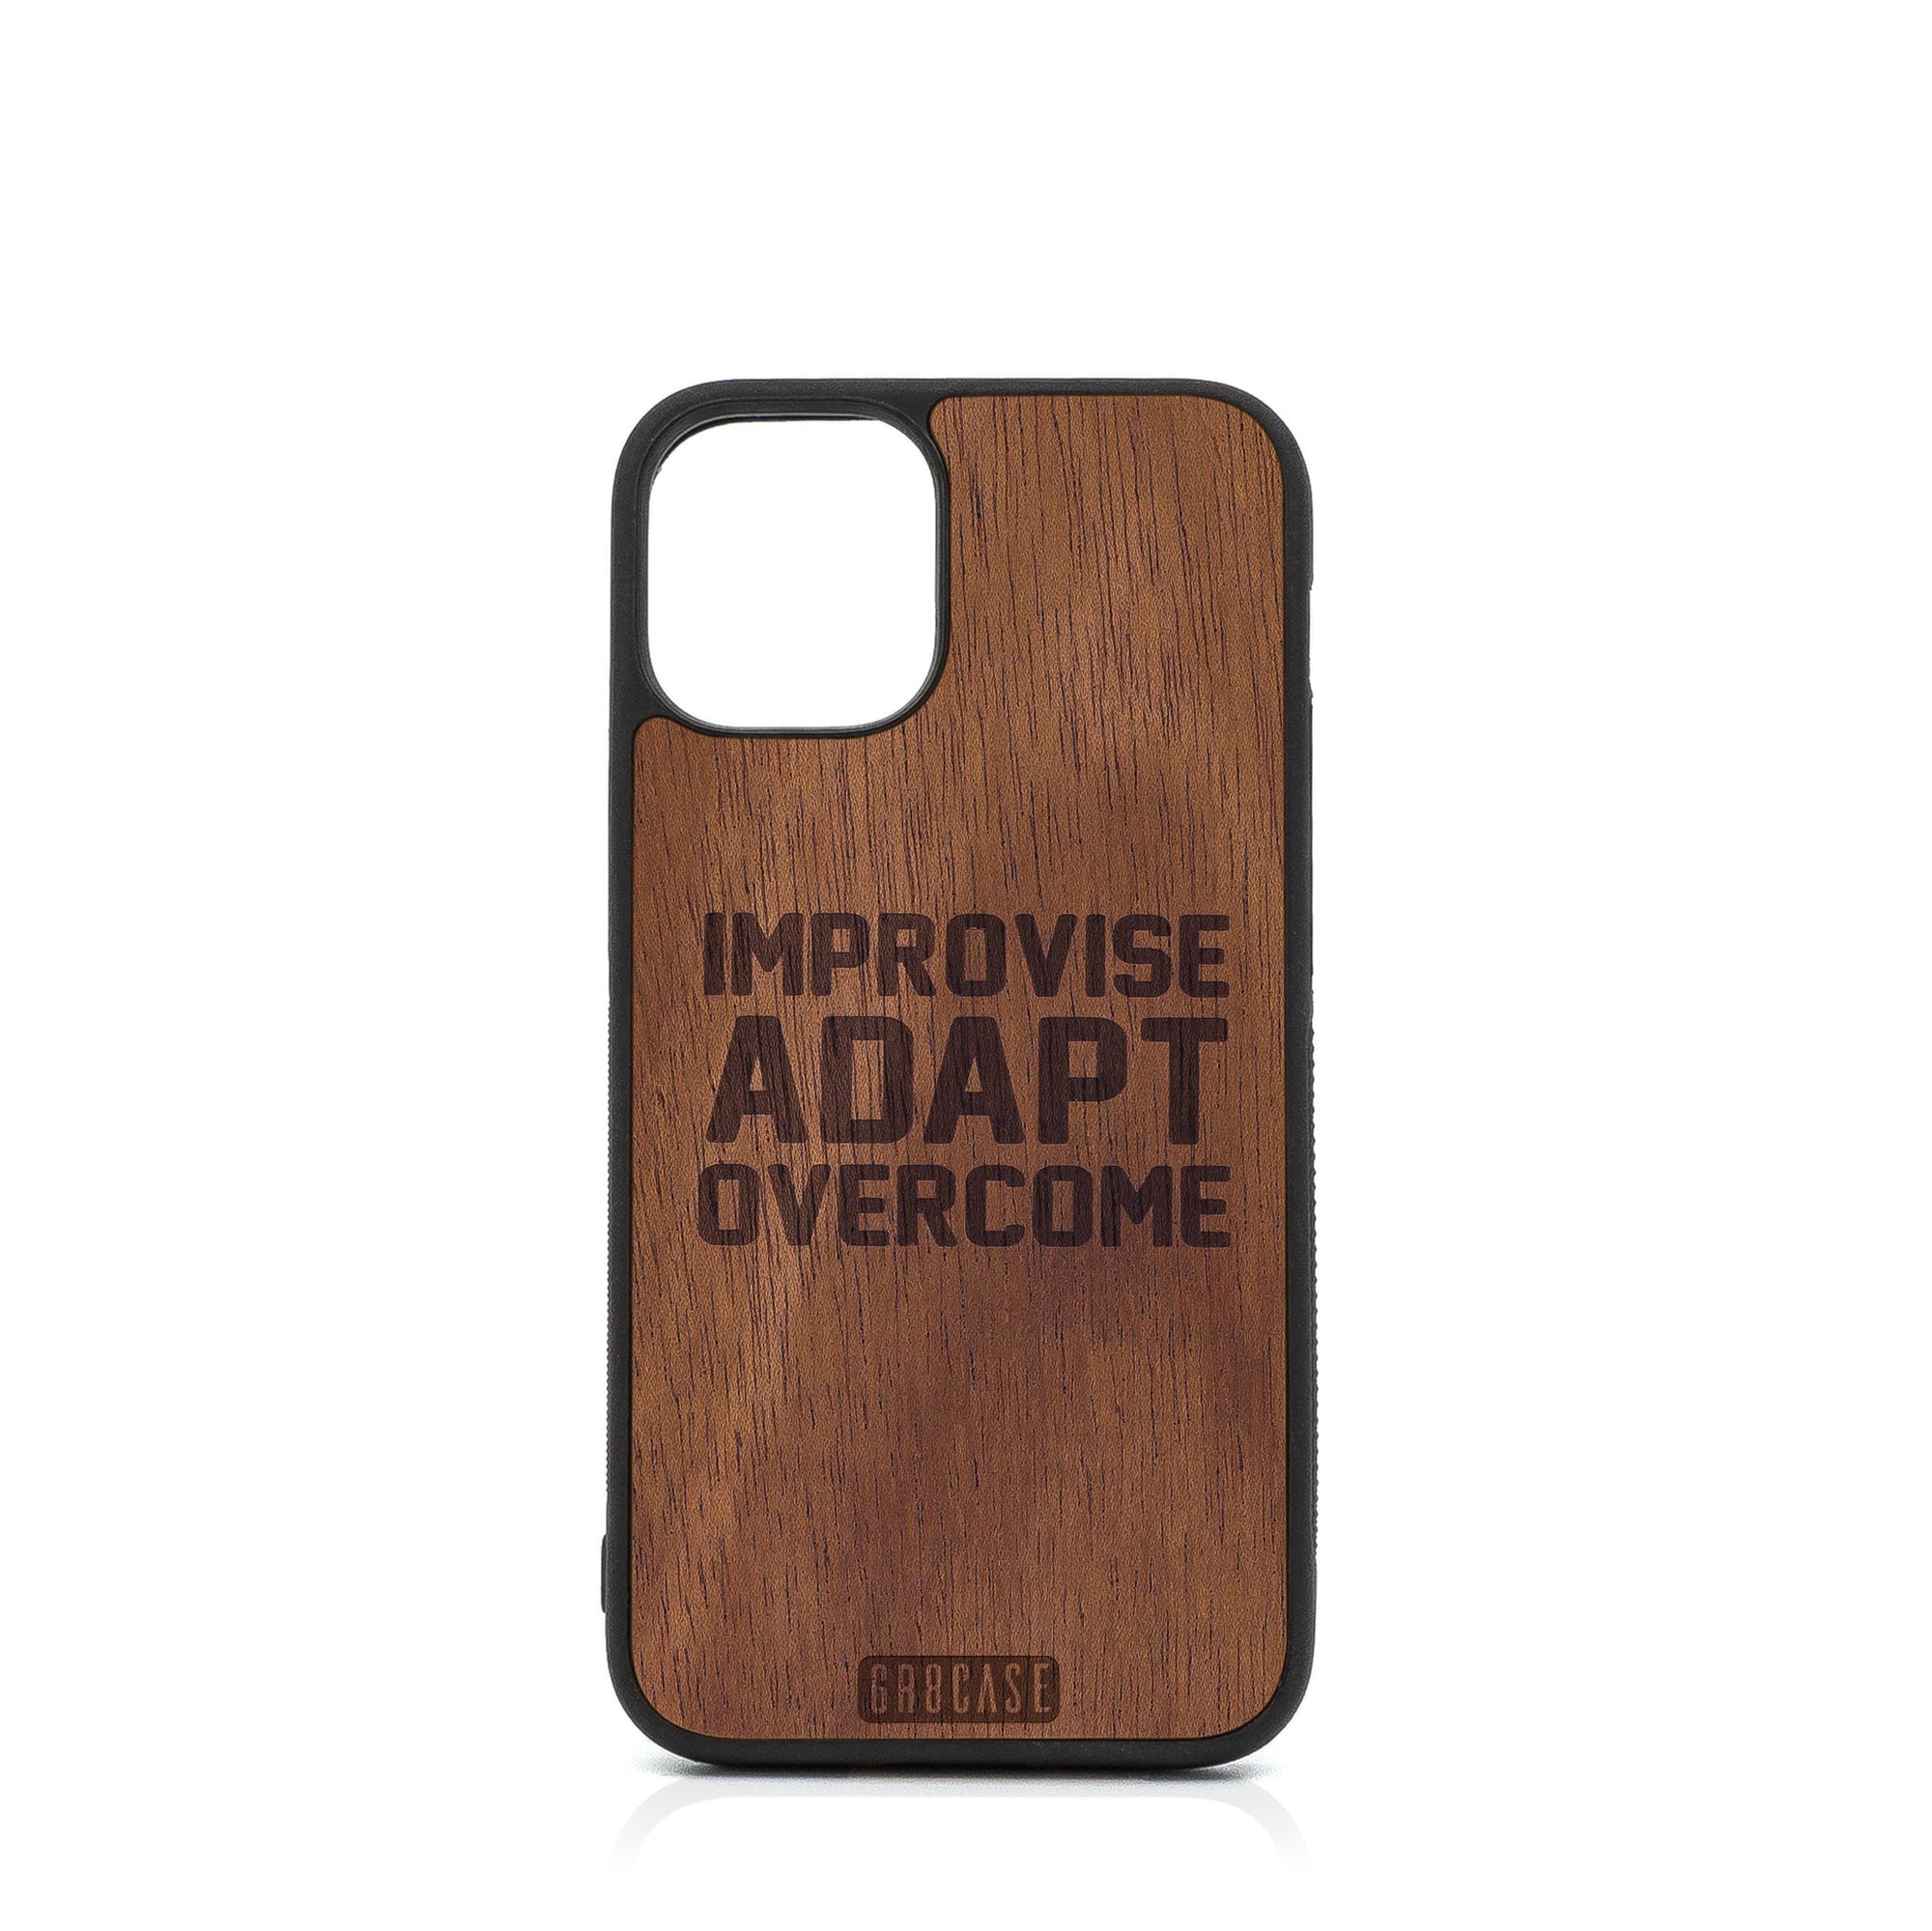 Improvise Adapt Overcome Design Wood Case For iPhone 12 Mini